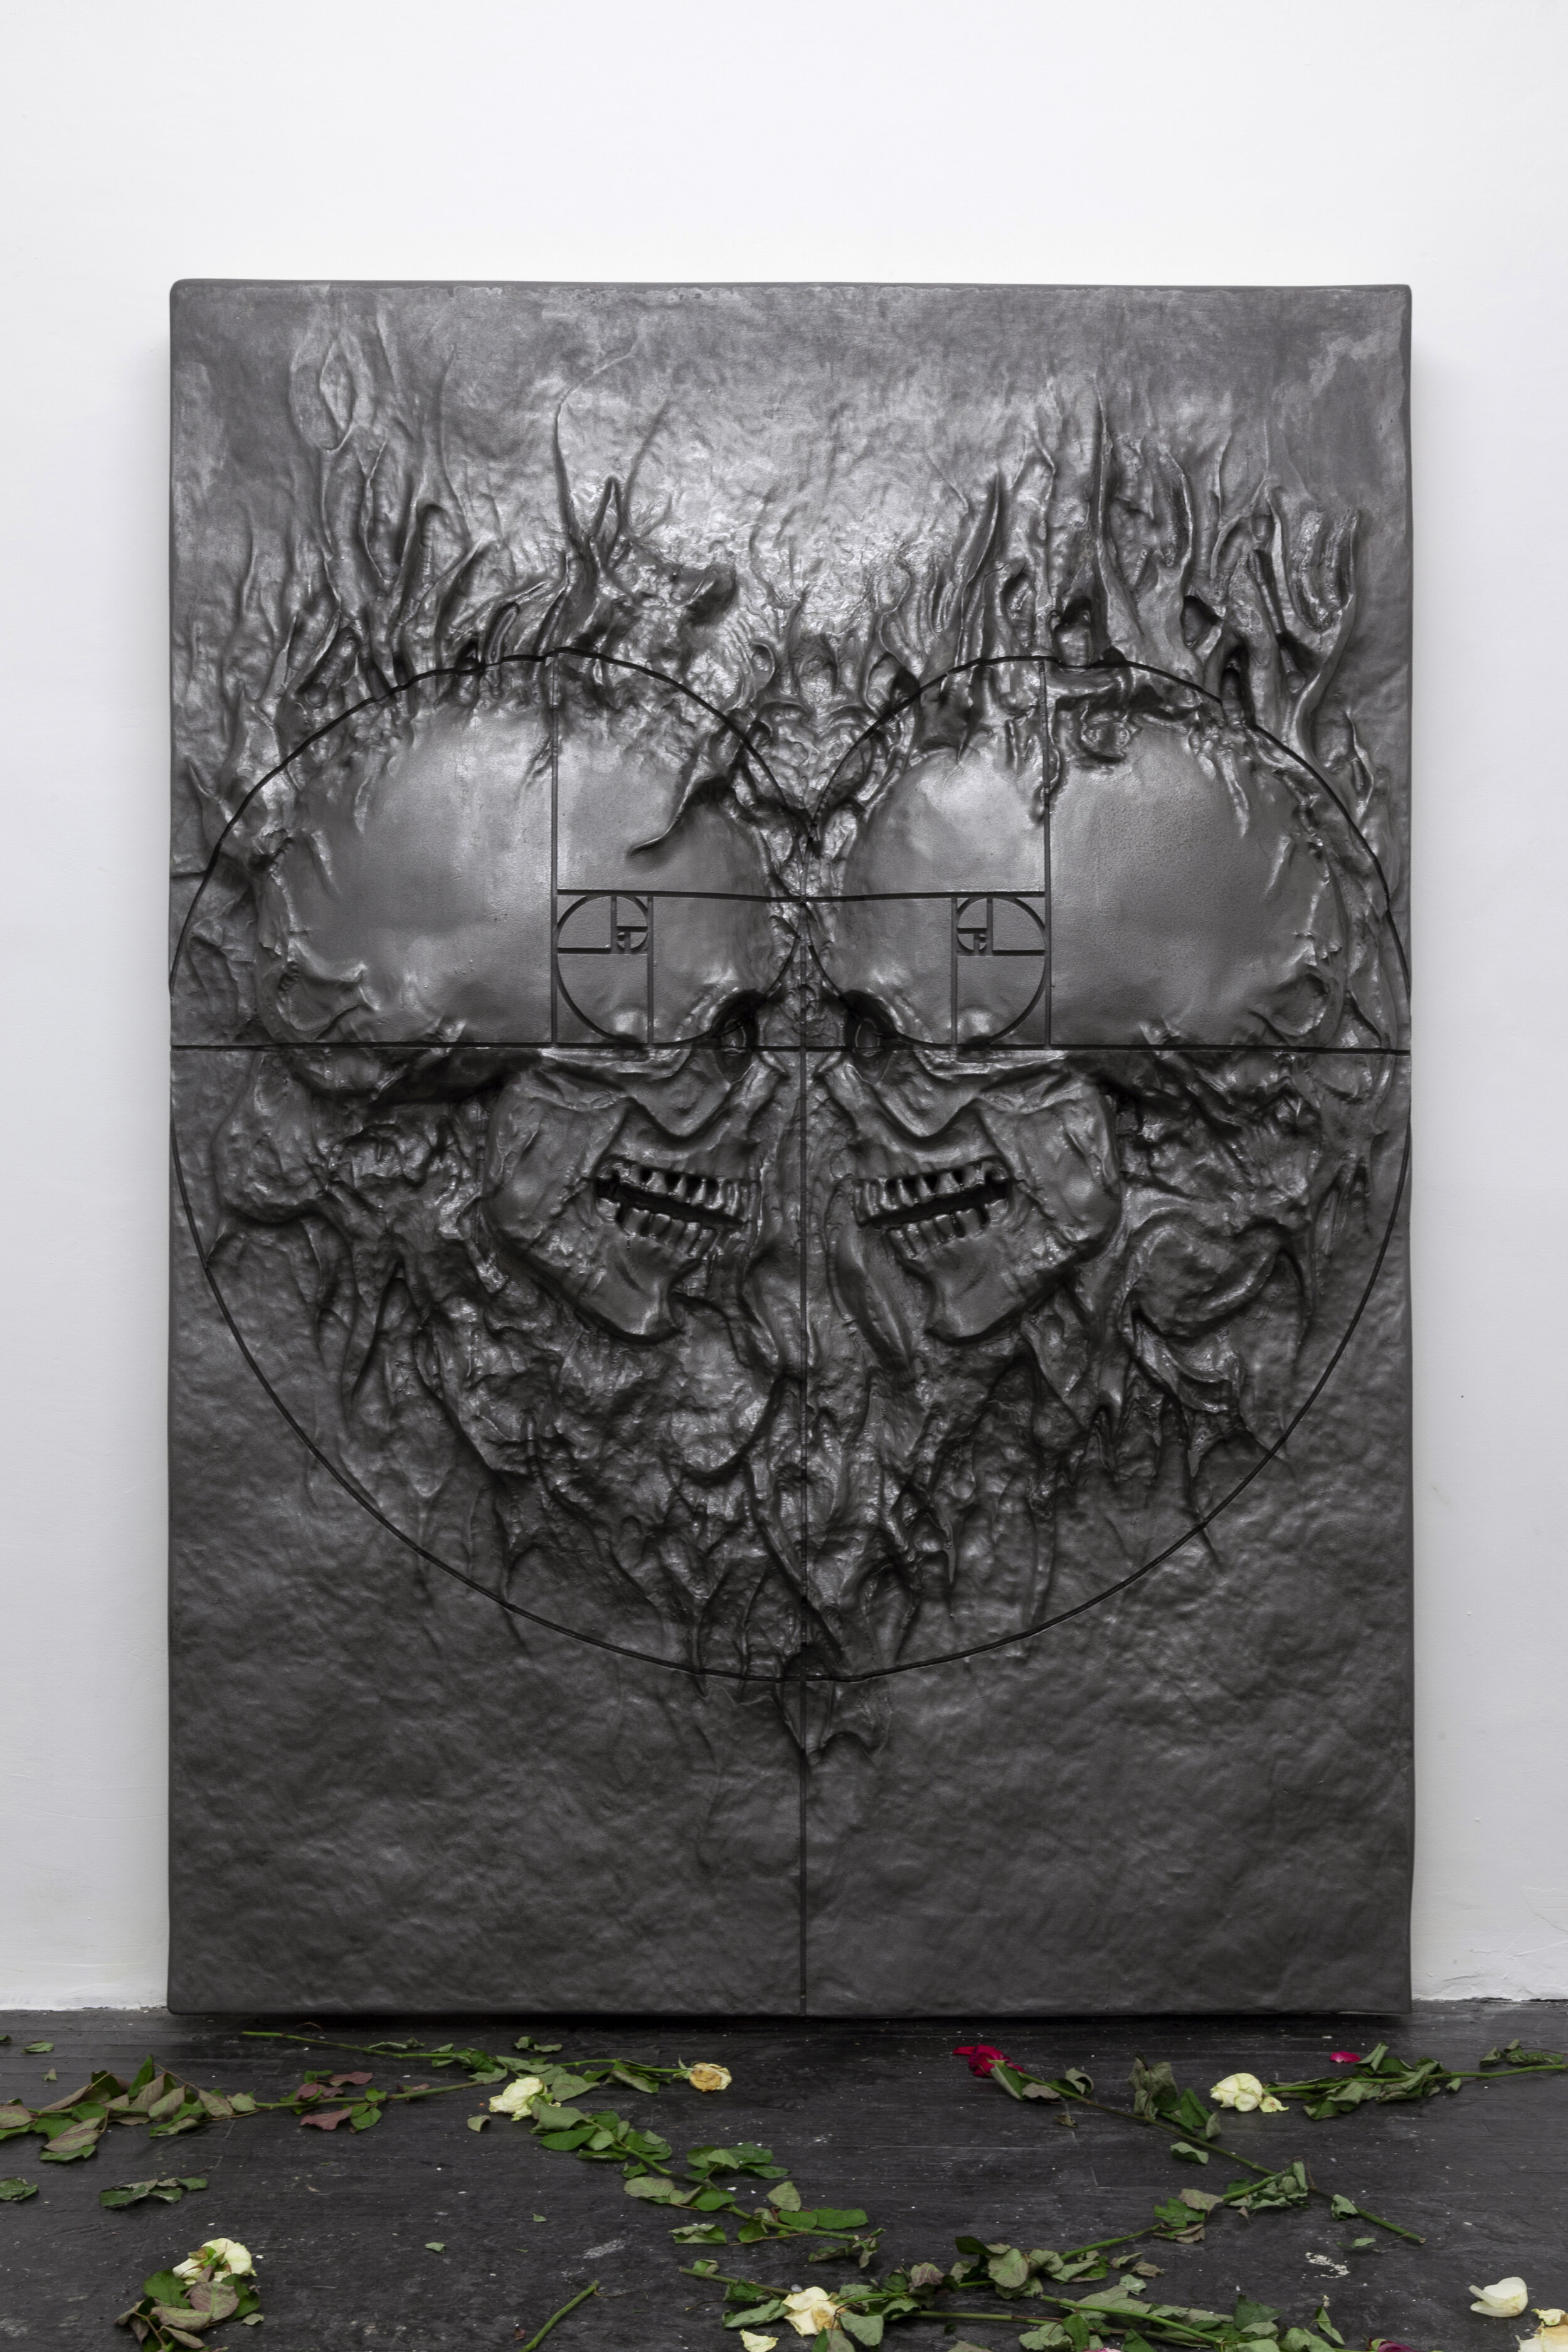  Julian-Jakob Kneer,  MARTYR (feast upon me / Alle Uhren bleiben stehen) , 2019, varnish on polyurethane foam, 185 x 133 x 23 cm 